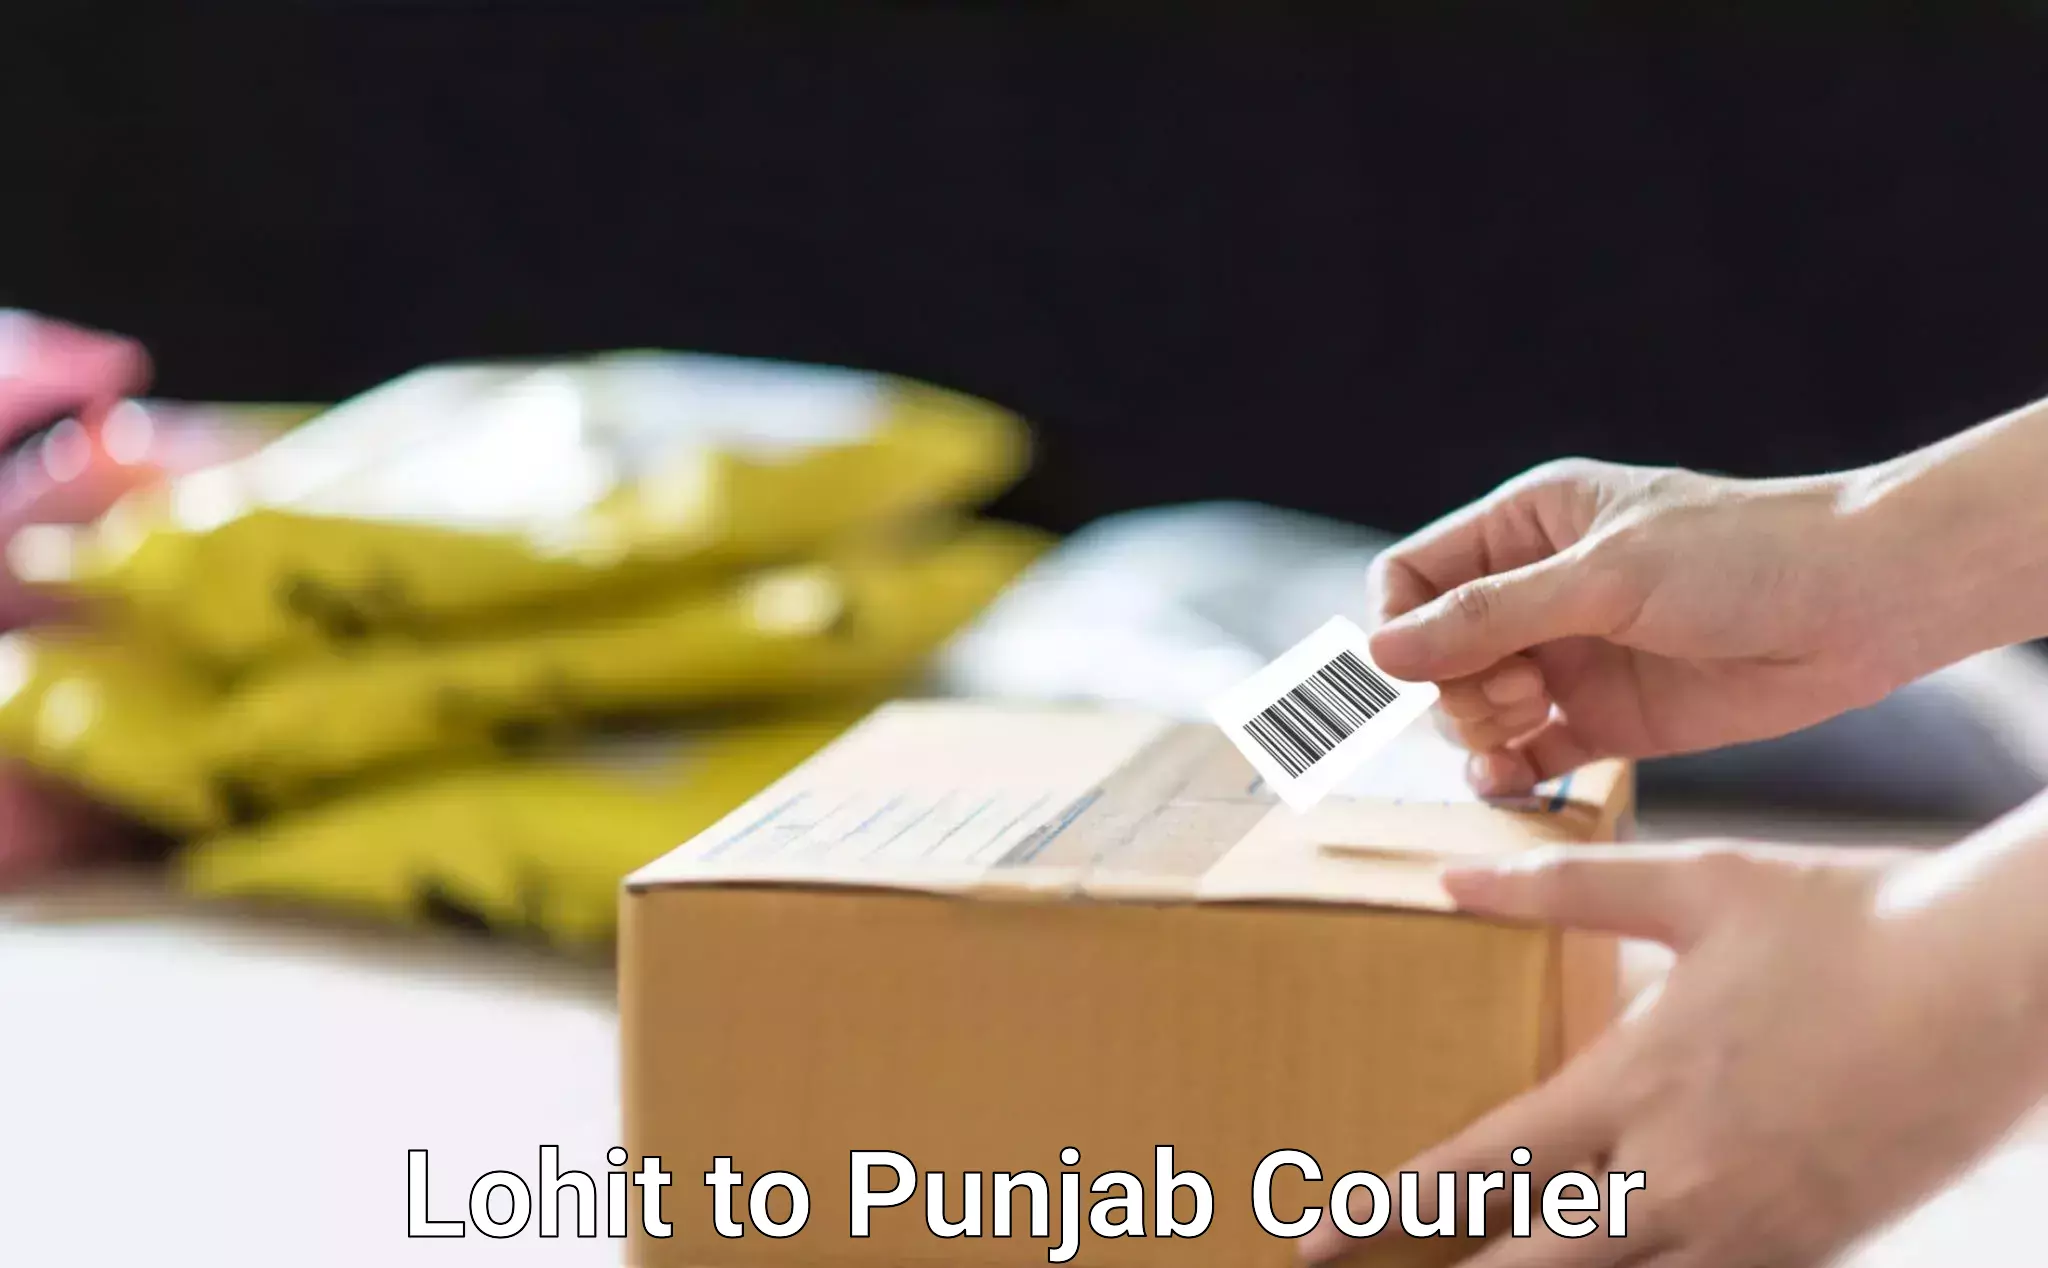 Express logistics providers Lohit to Abohar